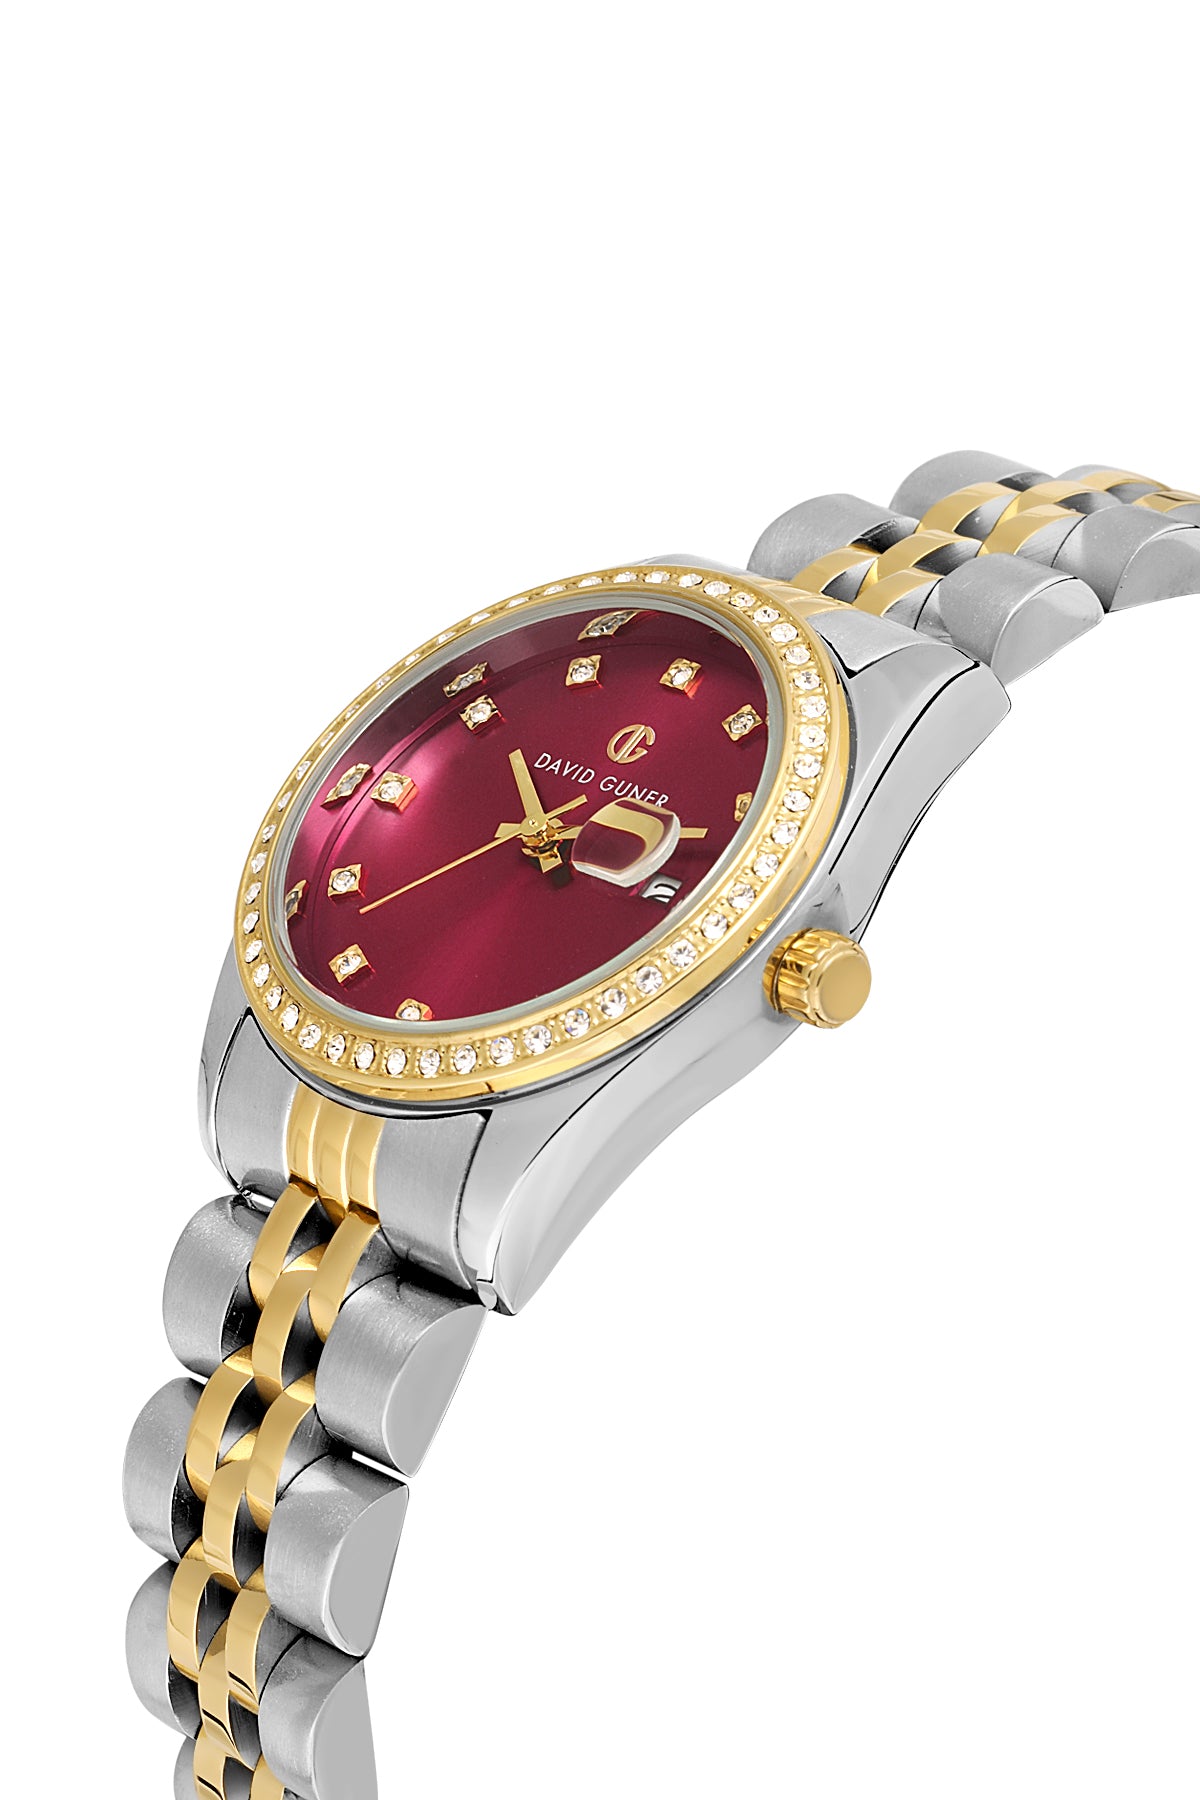 DAVID GUNER Red Dial Women's Wristwatch